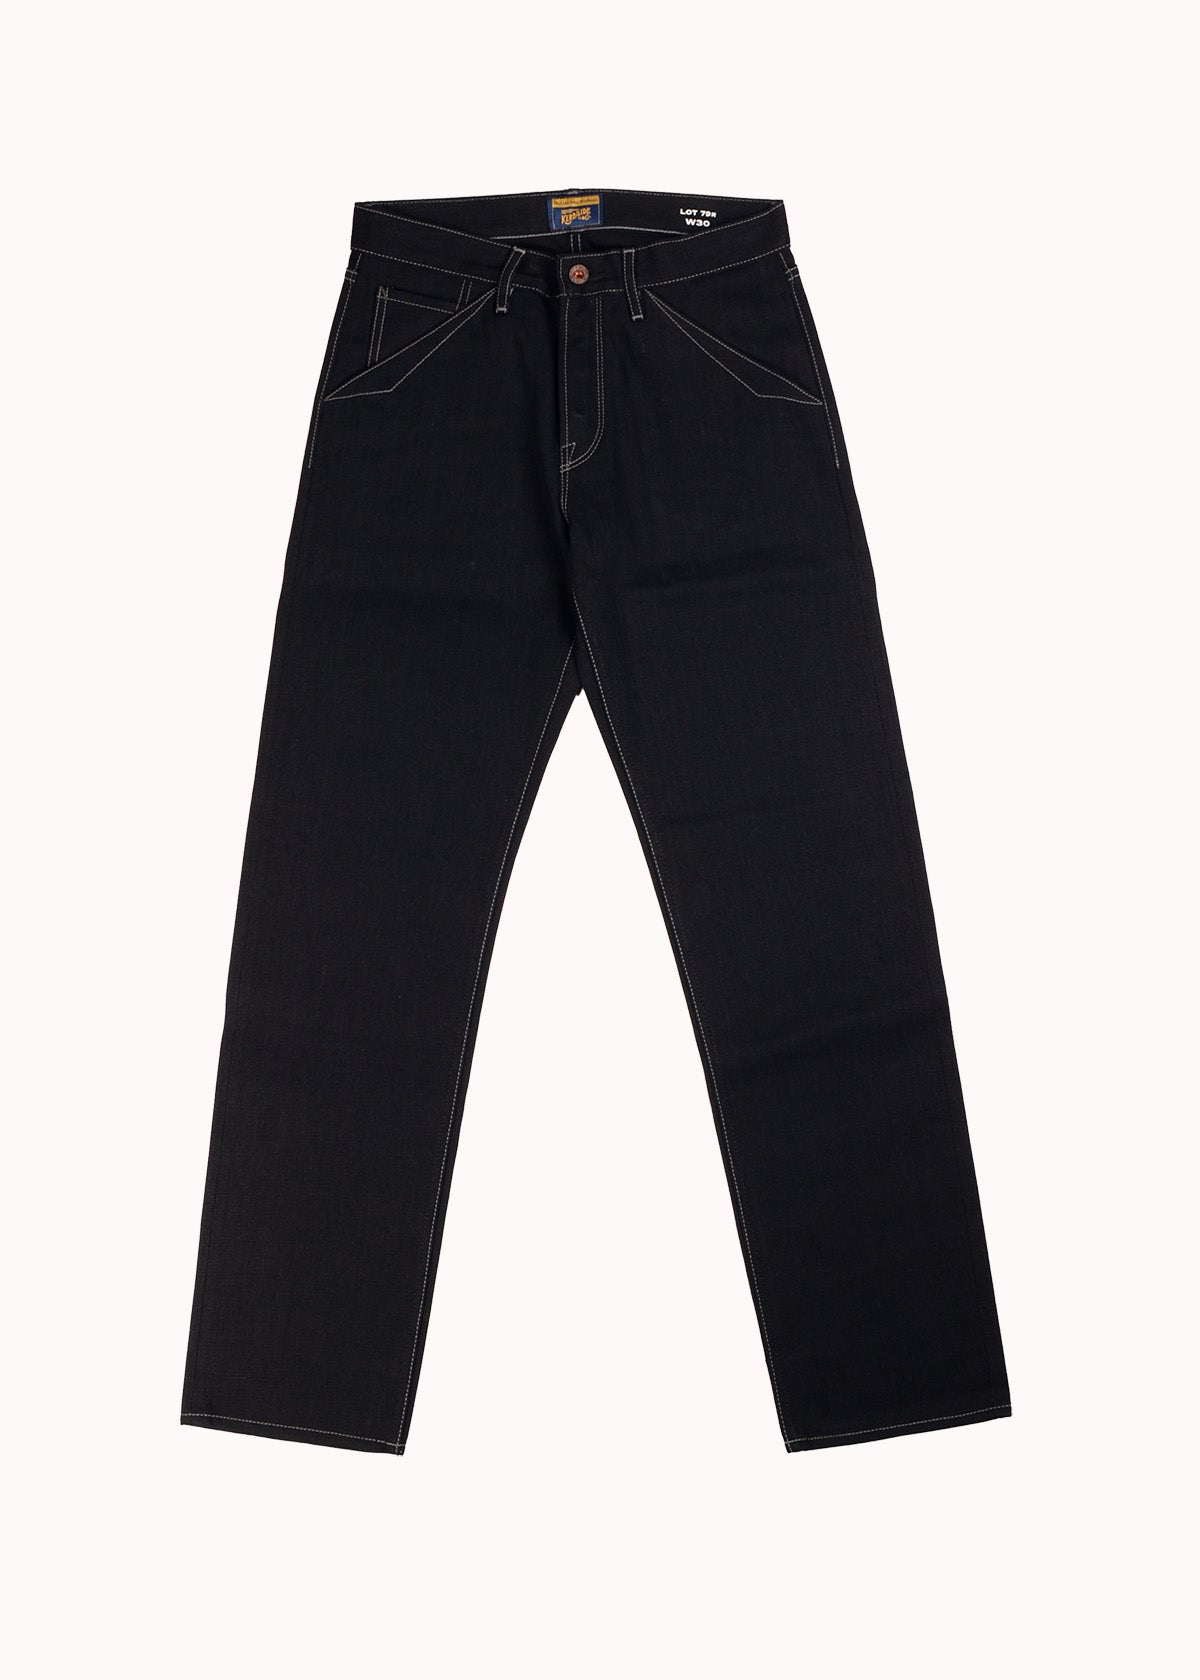 LOT 79R Jeans - Black